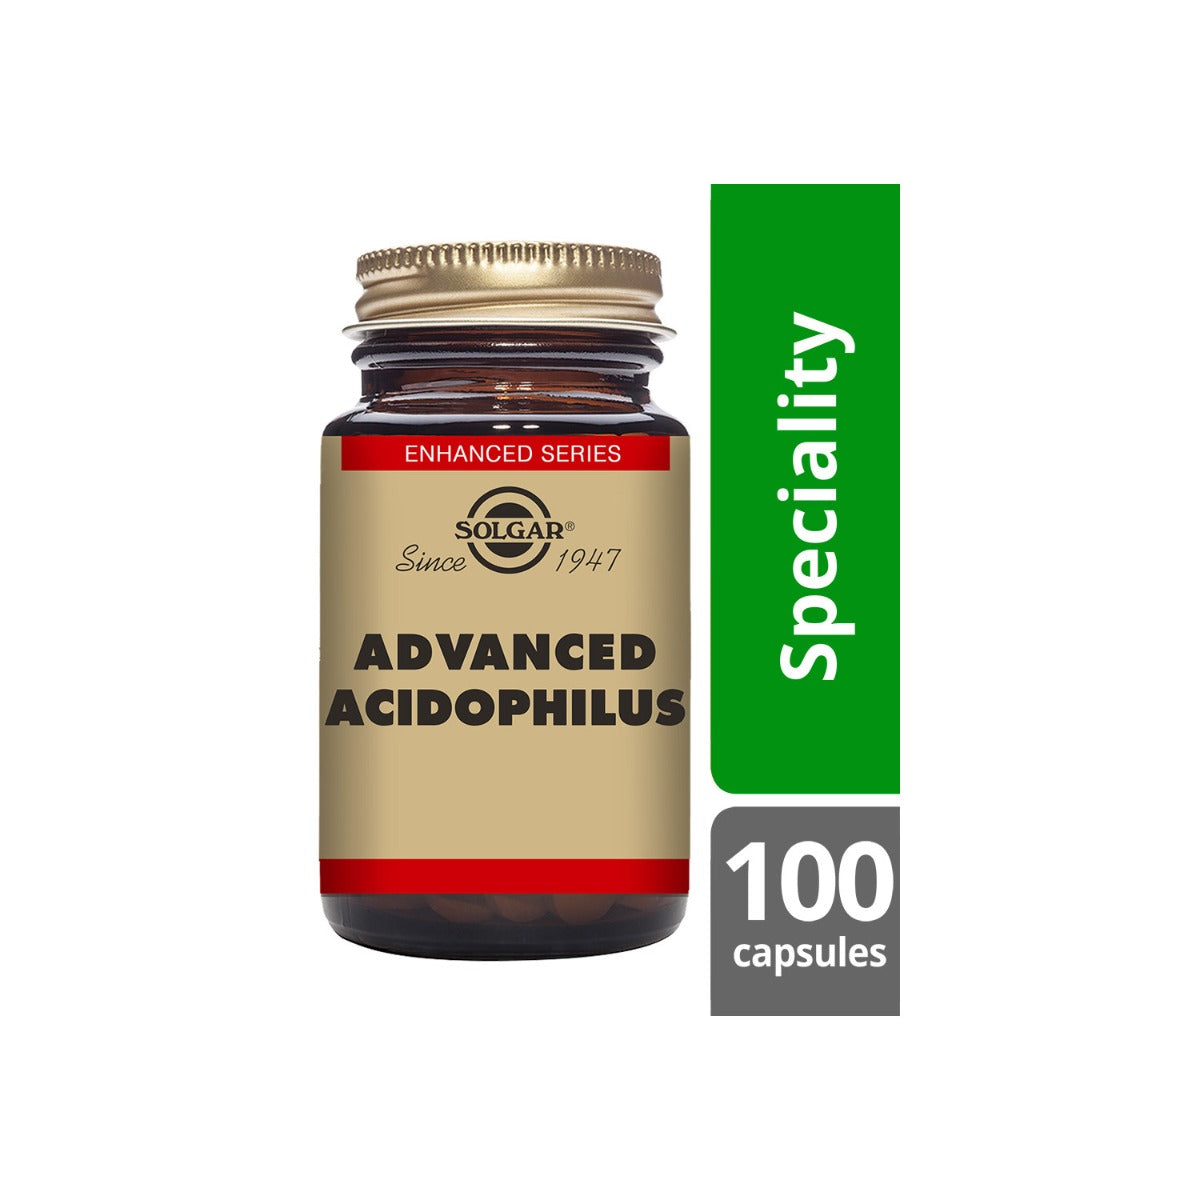 Solgar® Advanced Acidophilus Vegetable Capsules - Pack of 100